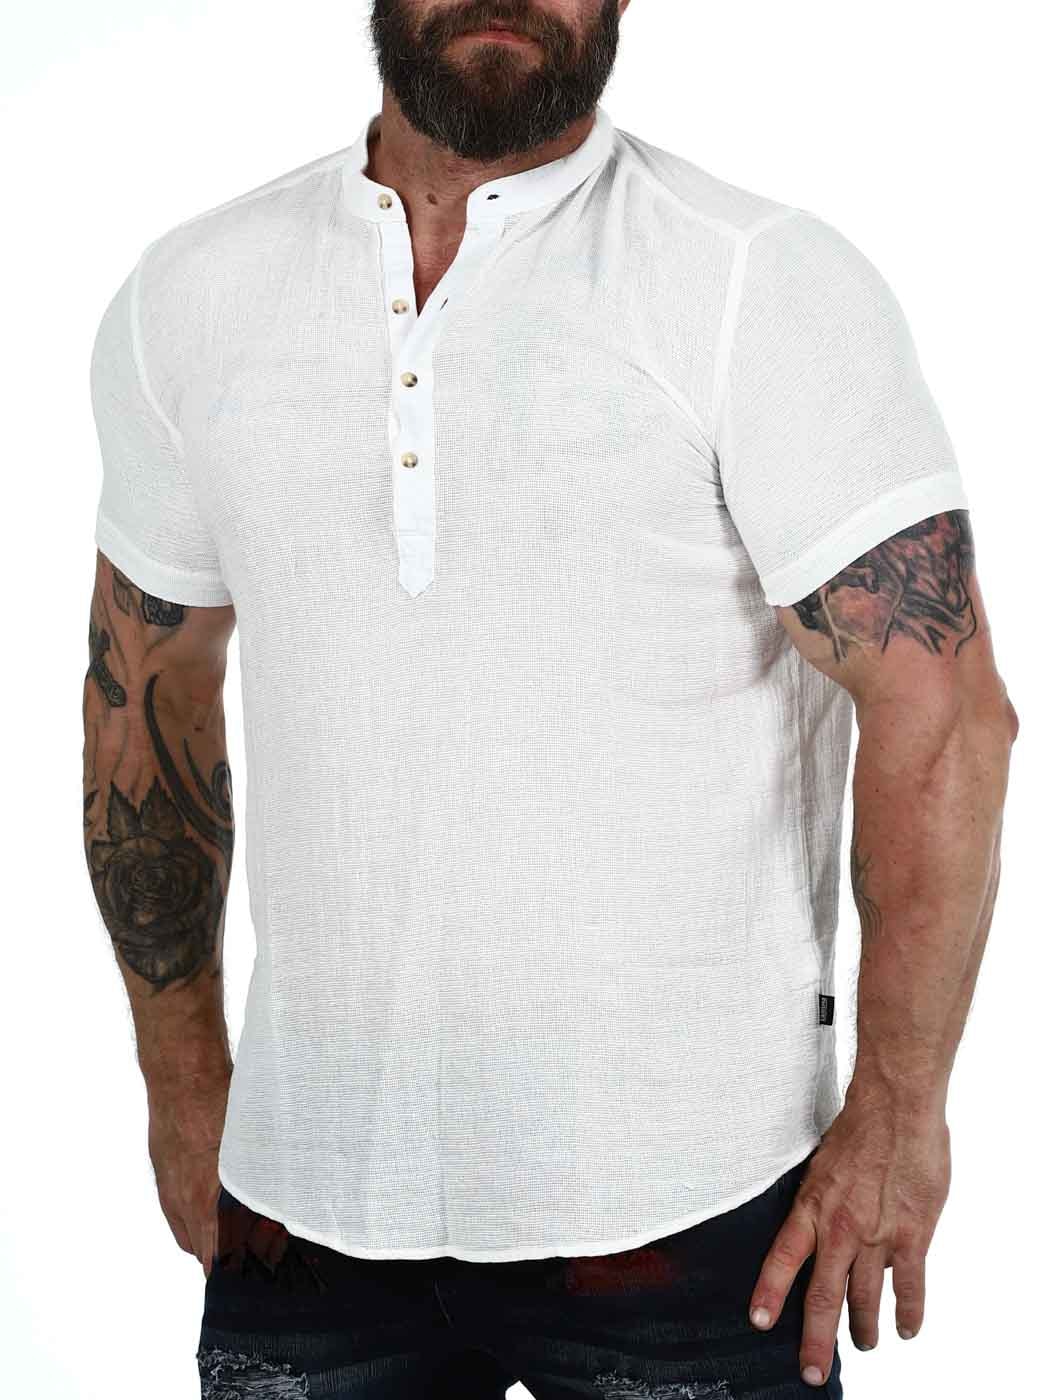 Kairo shortsleeve shirt white_3.jpg